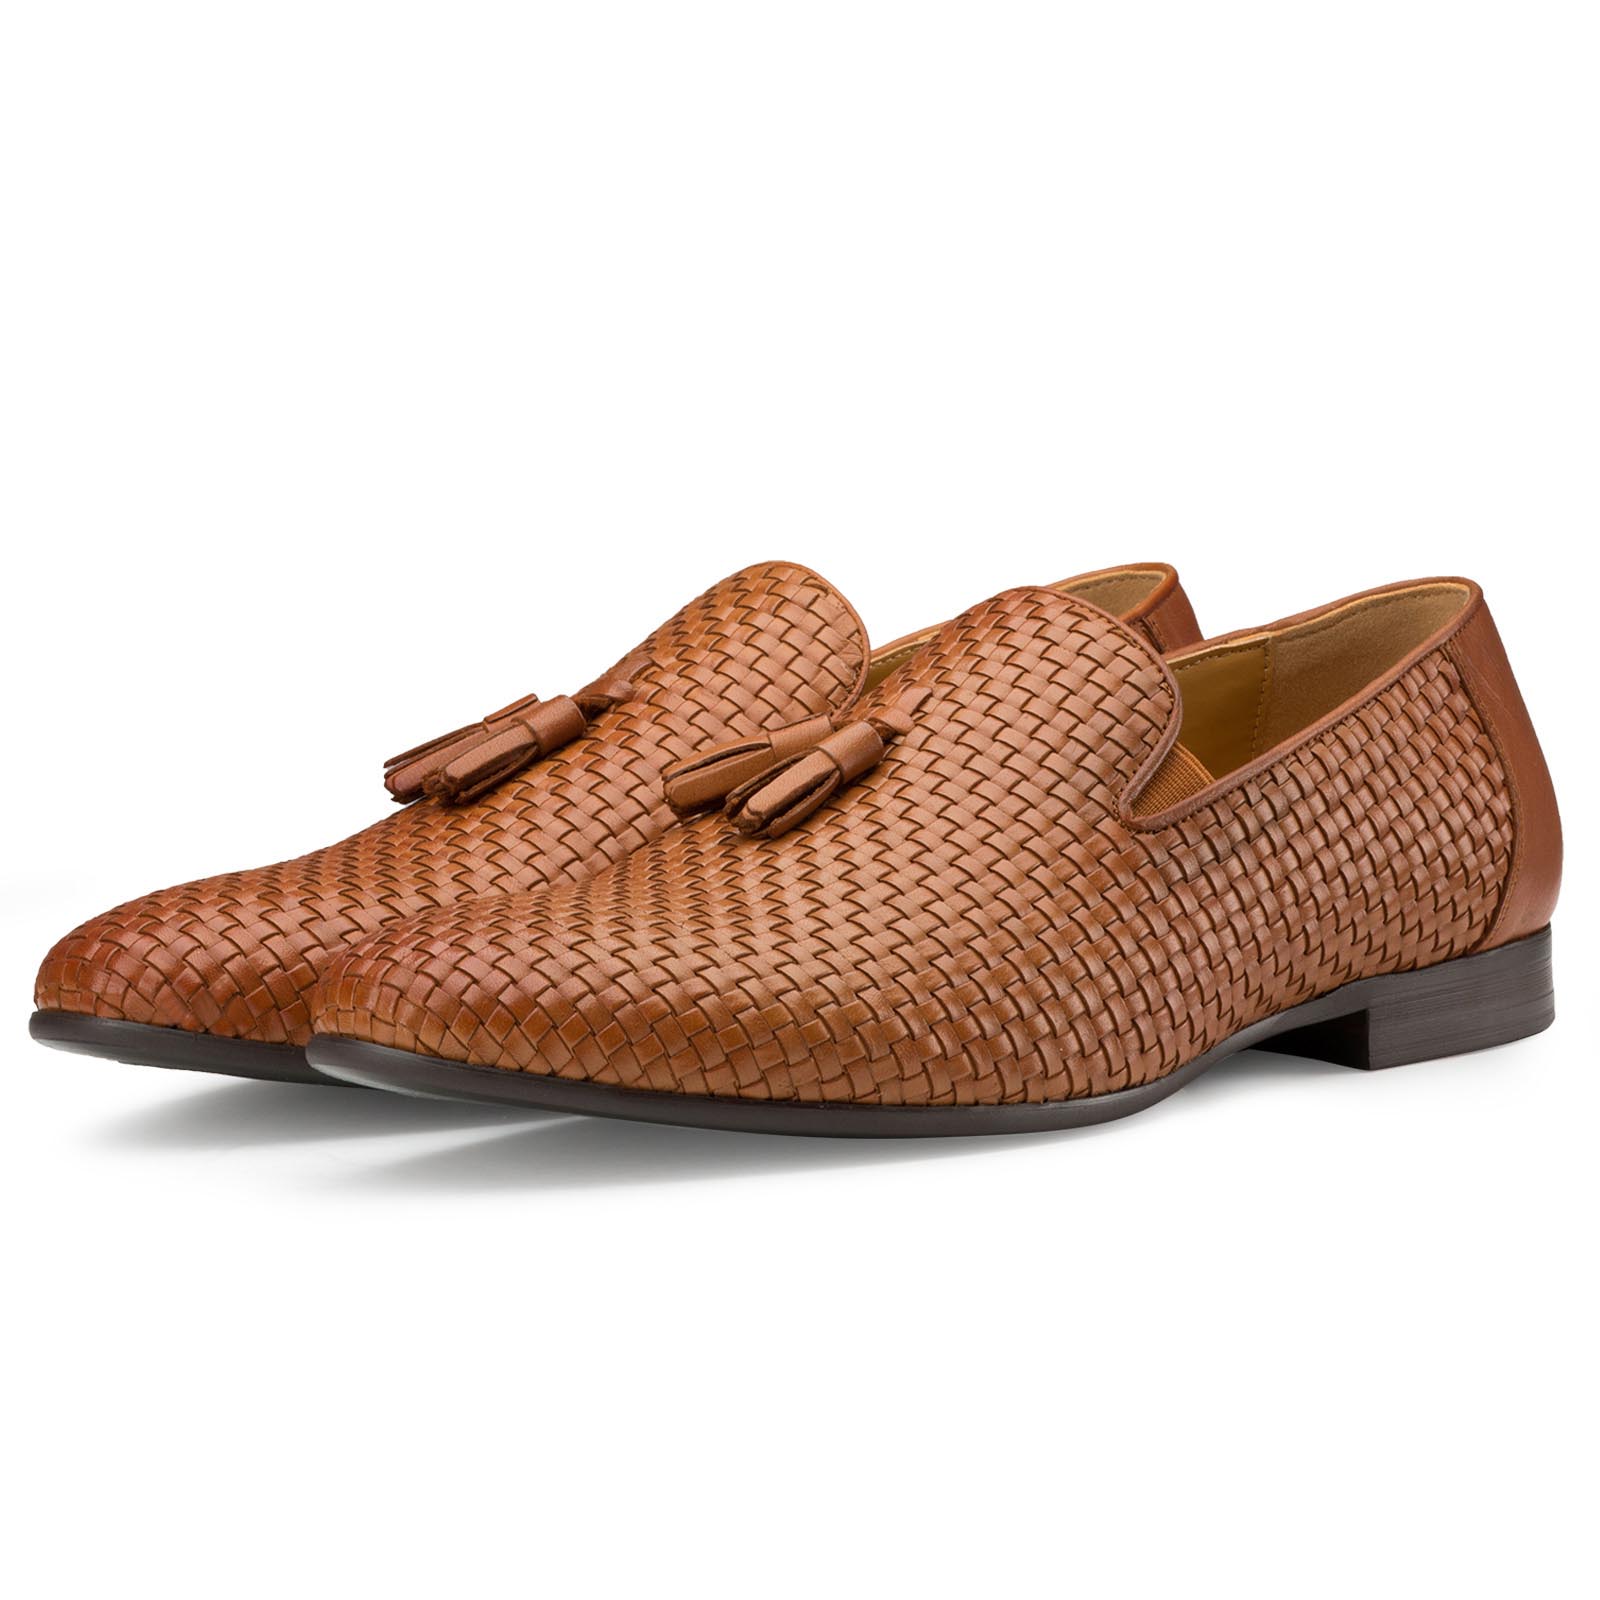 Buy British Royal Tan Weaved Tassel Loafers for Men - Escaro Royale